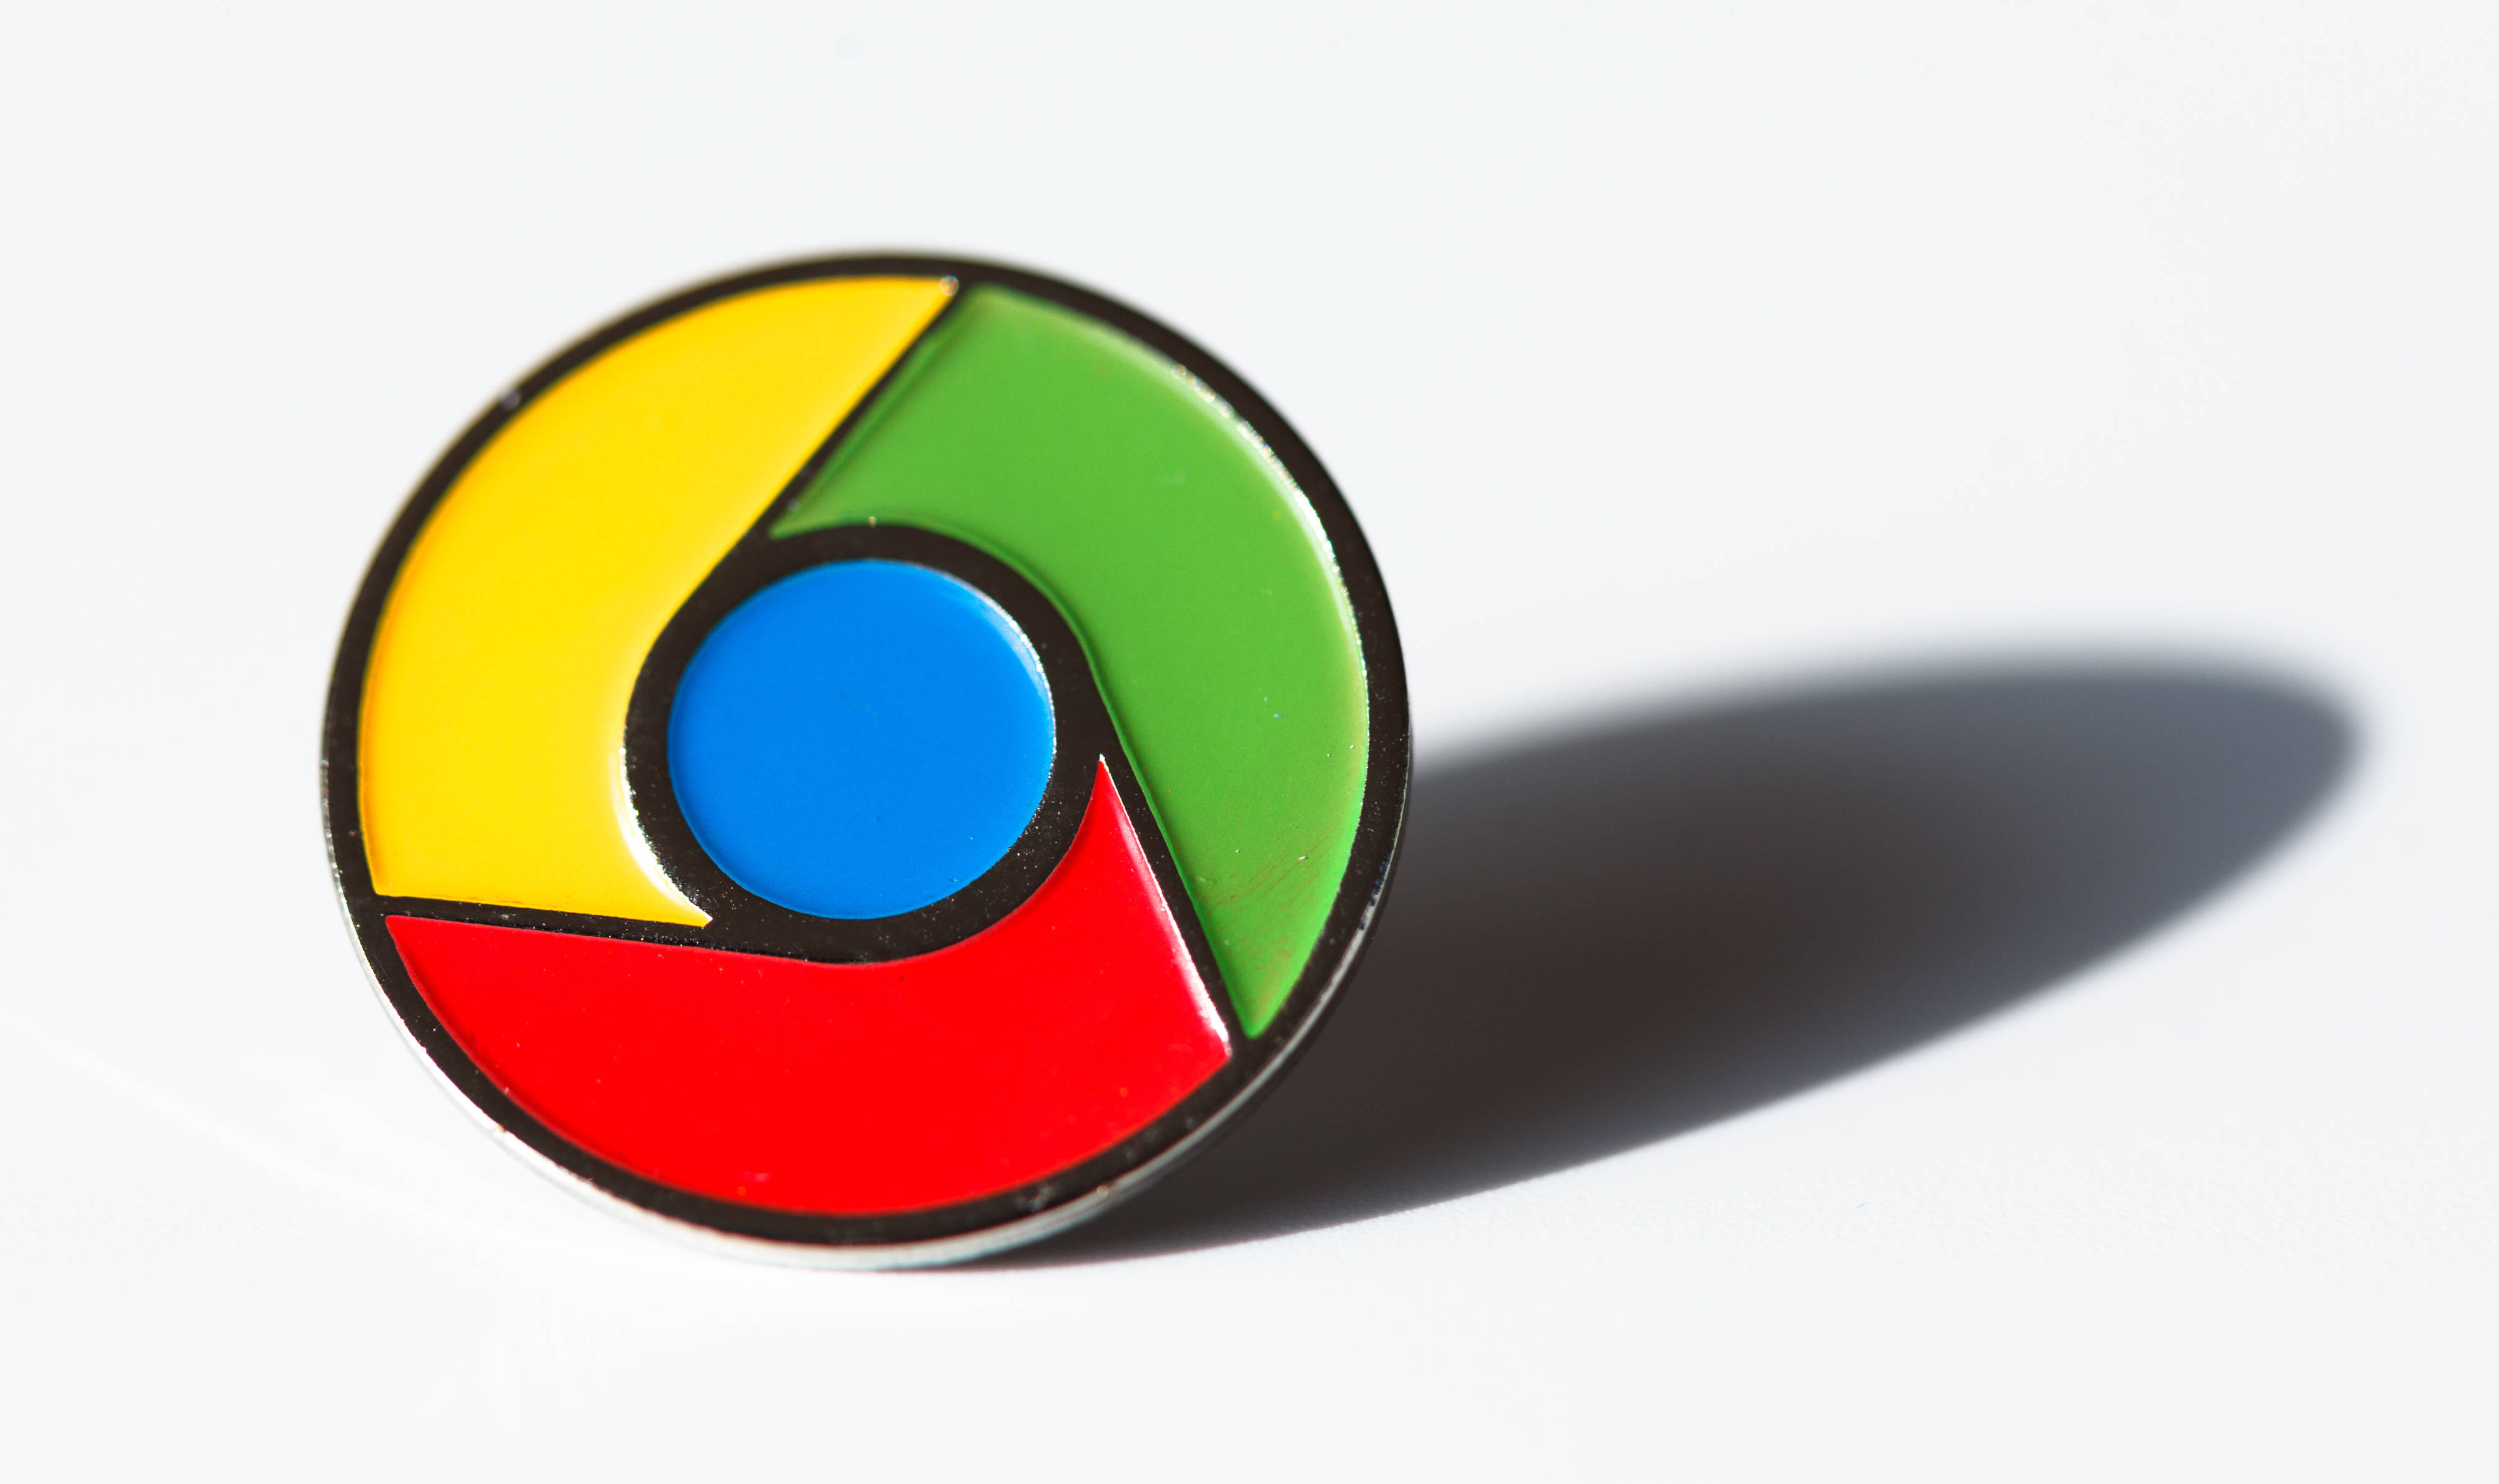 Minimalist Google Chrome Brooch Background